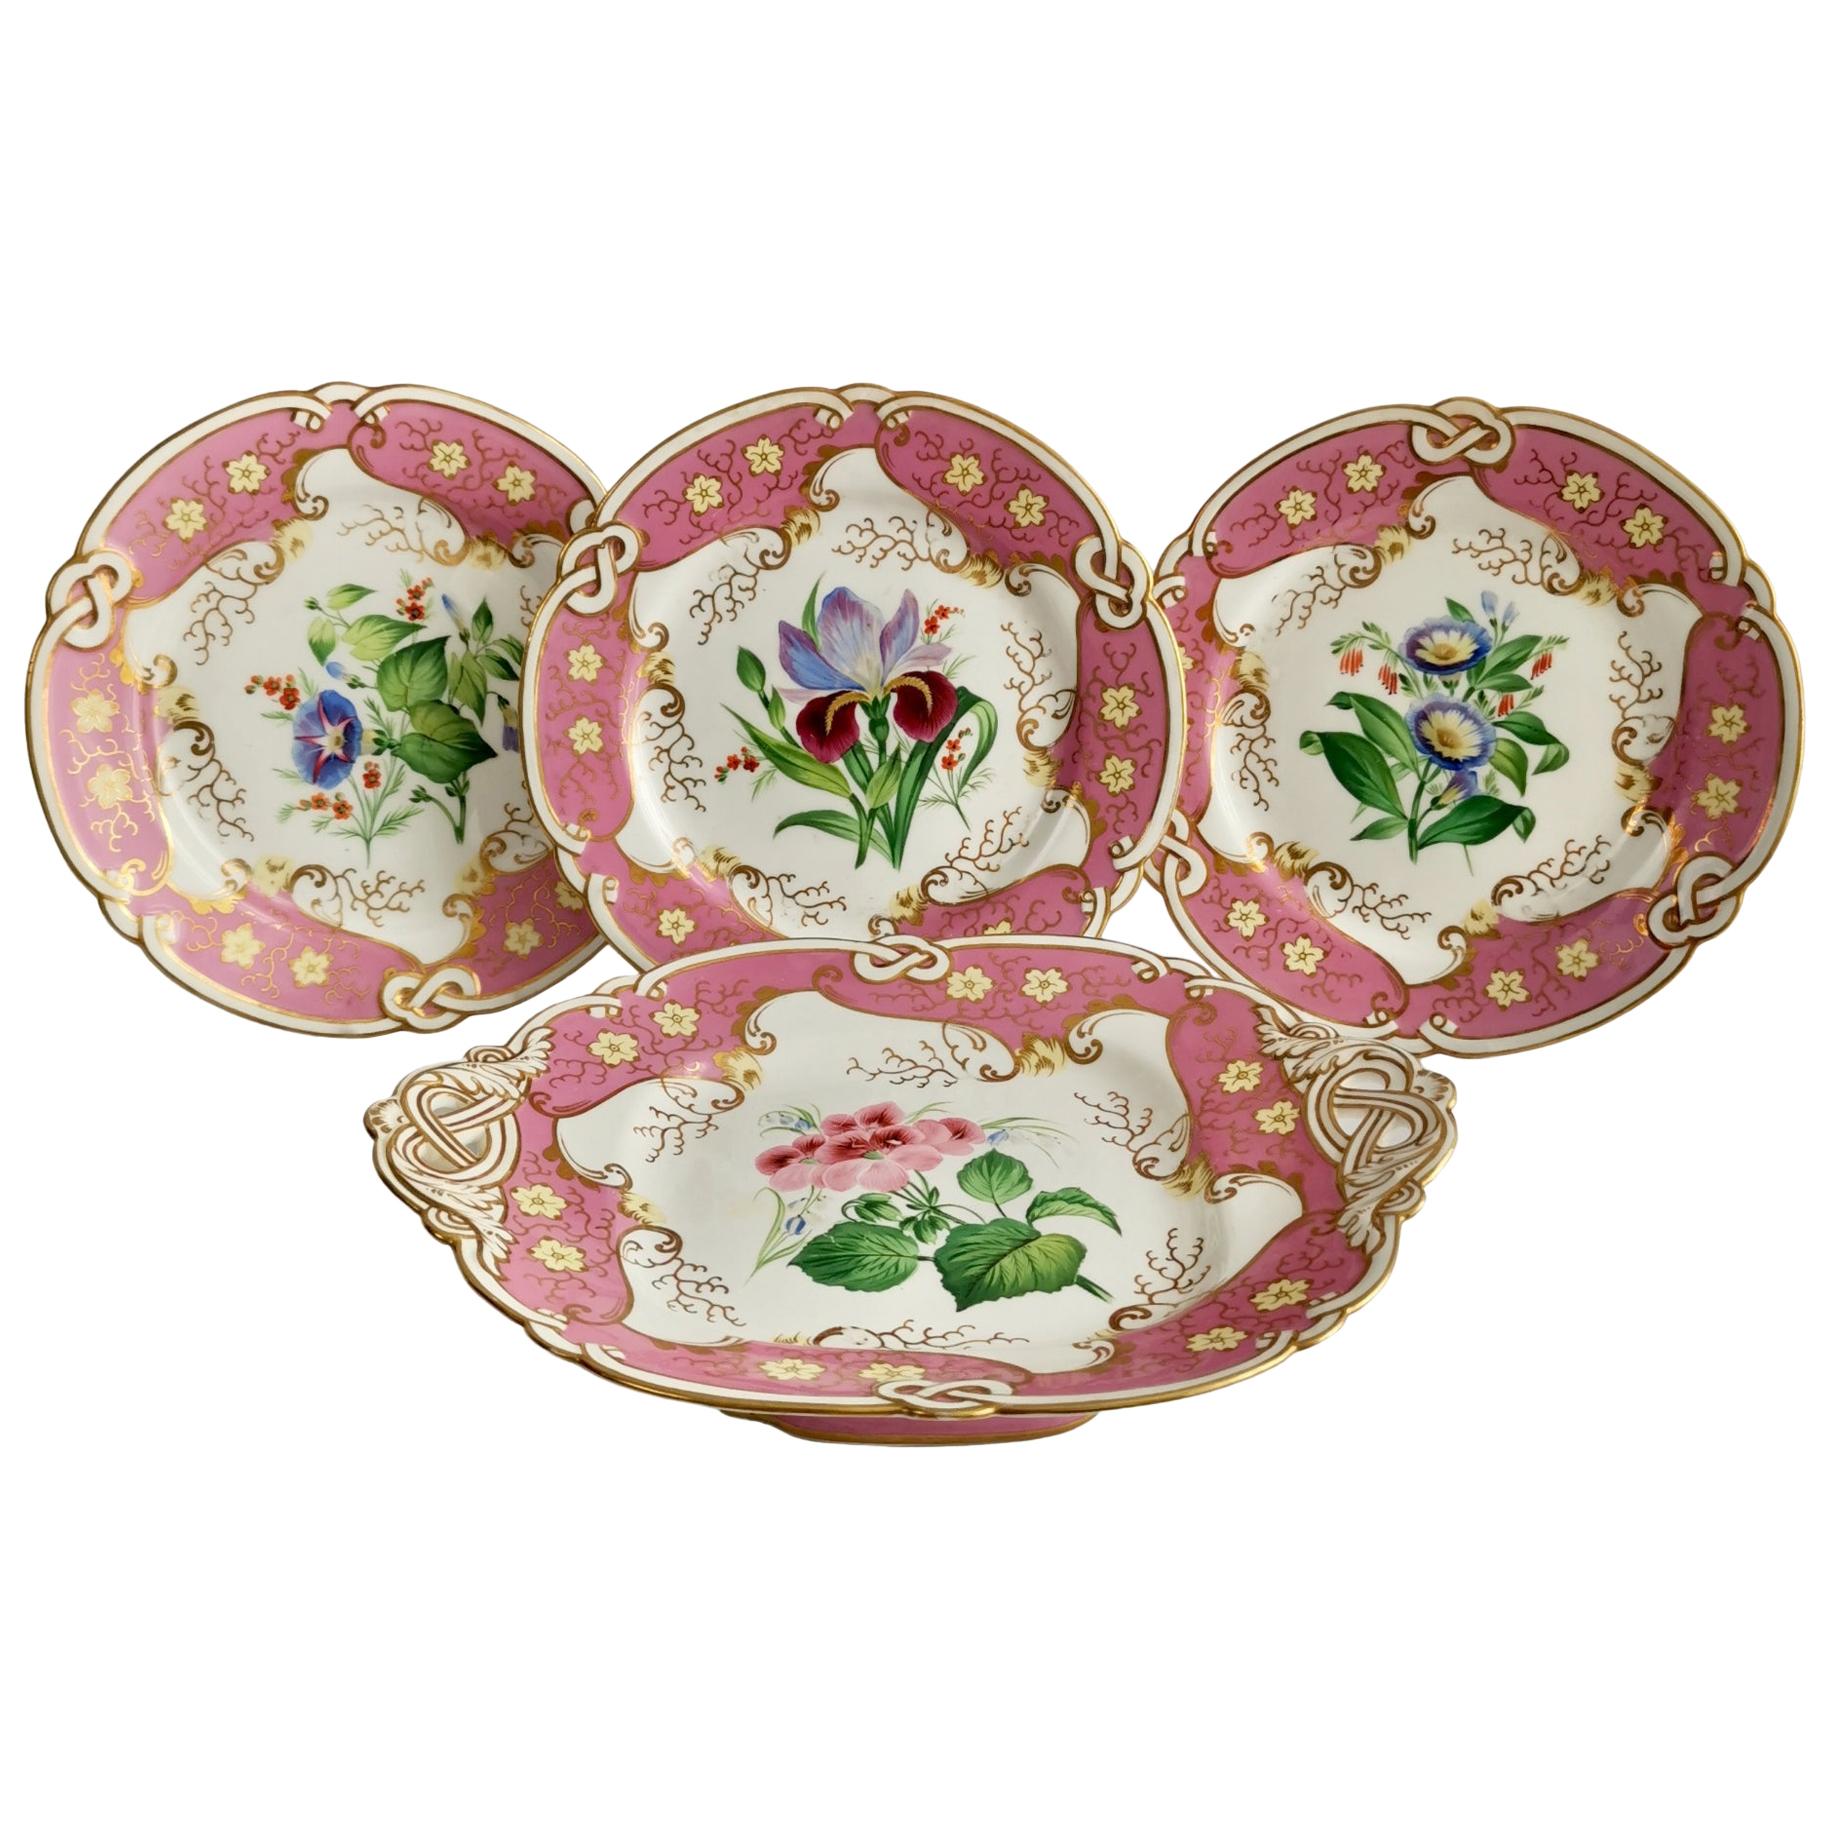 Samuel Alcock Small Porcelain Dessert Set, Pink with Flowers, Victorian 1854